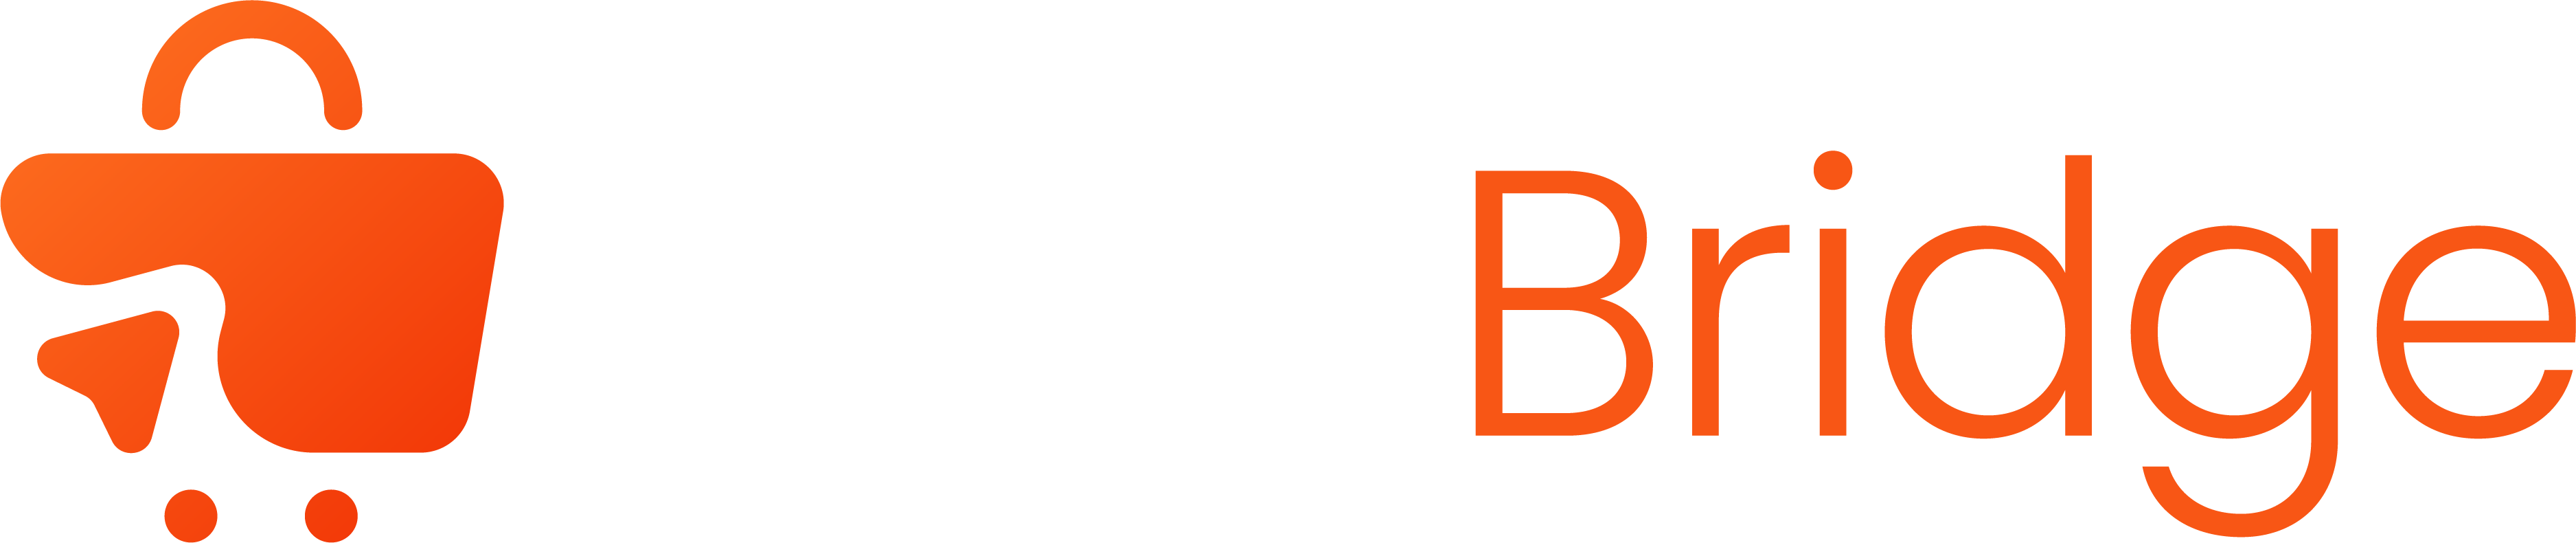 StallBridge Logo New w